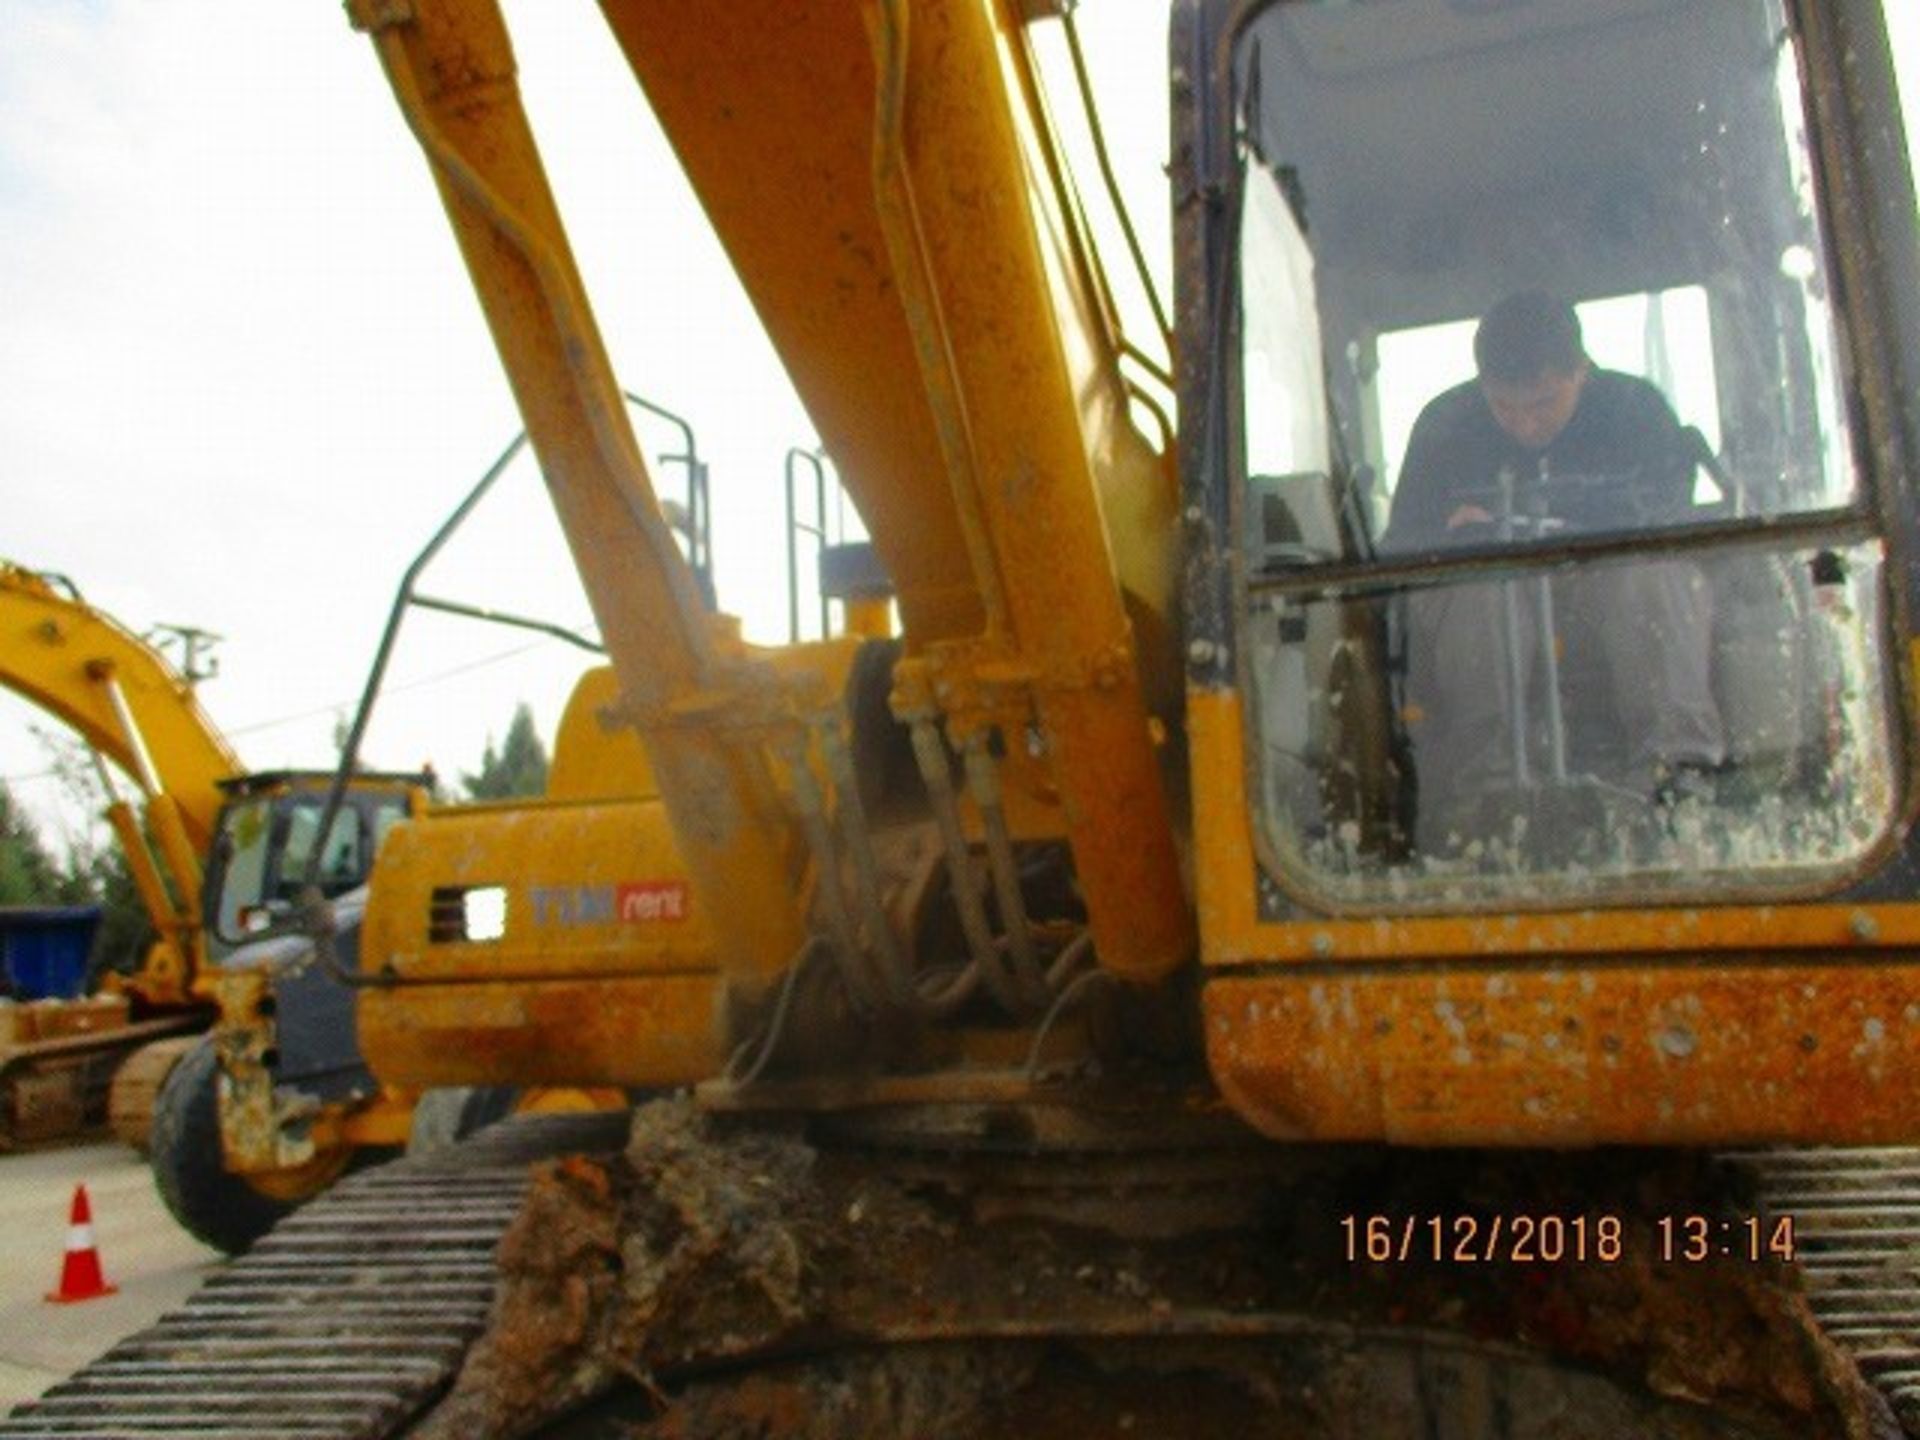 Komatsu PC300-8 Tracked Excavator - Image 30 of 31